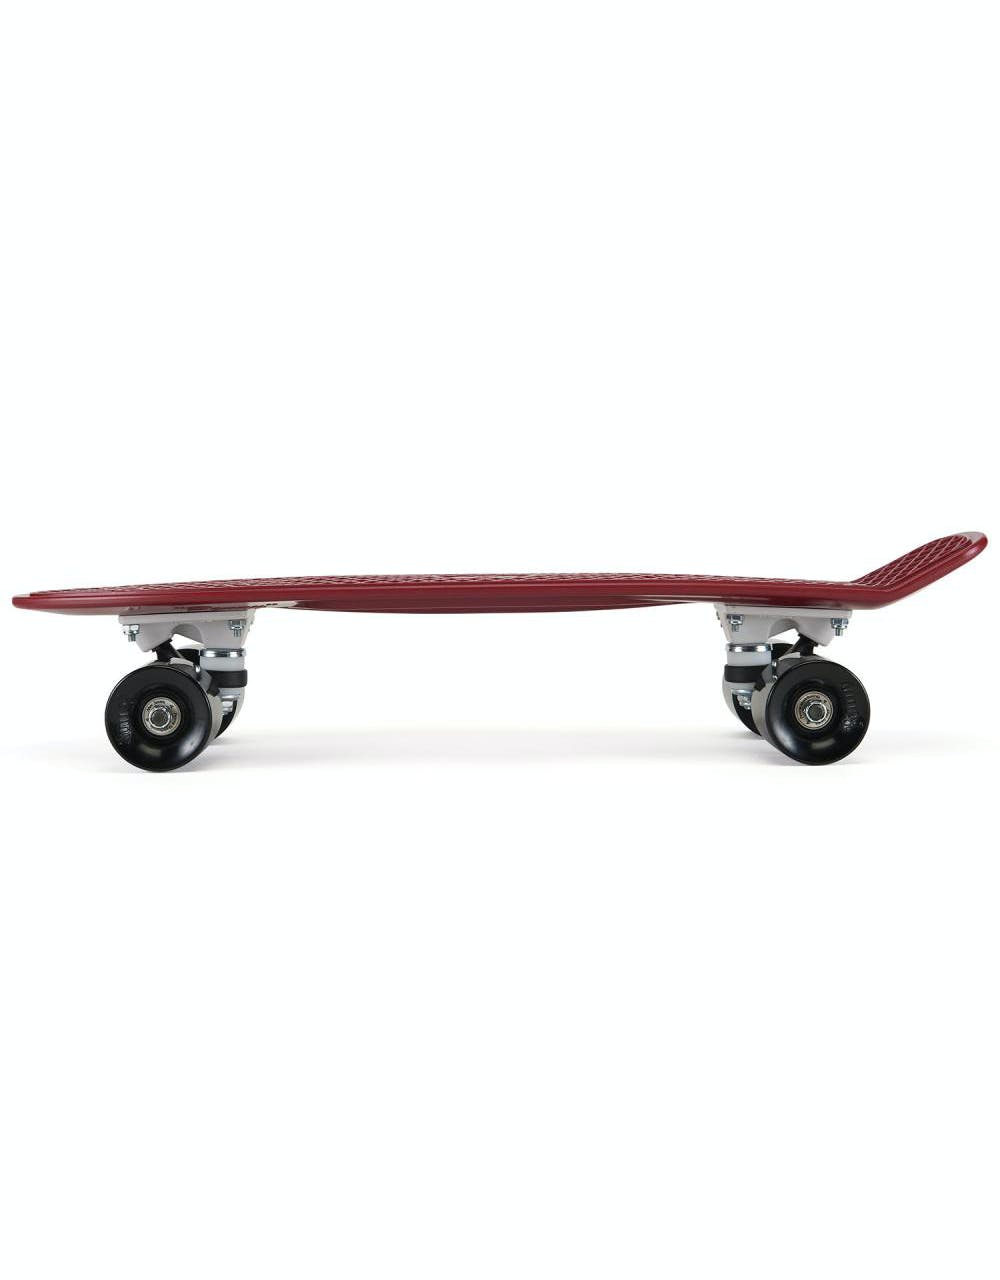 Penny Skateboards Classic Cruiser - 22" - Burgundy